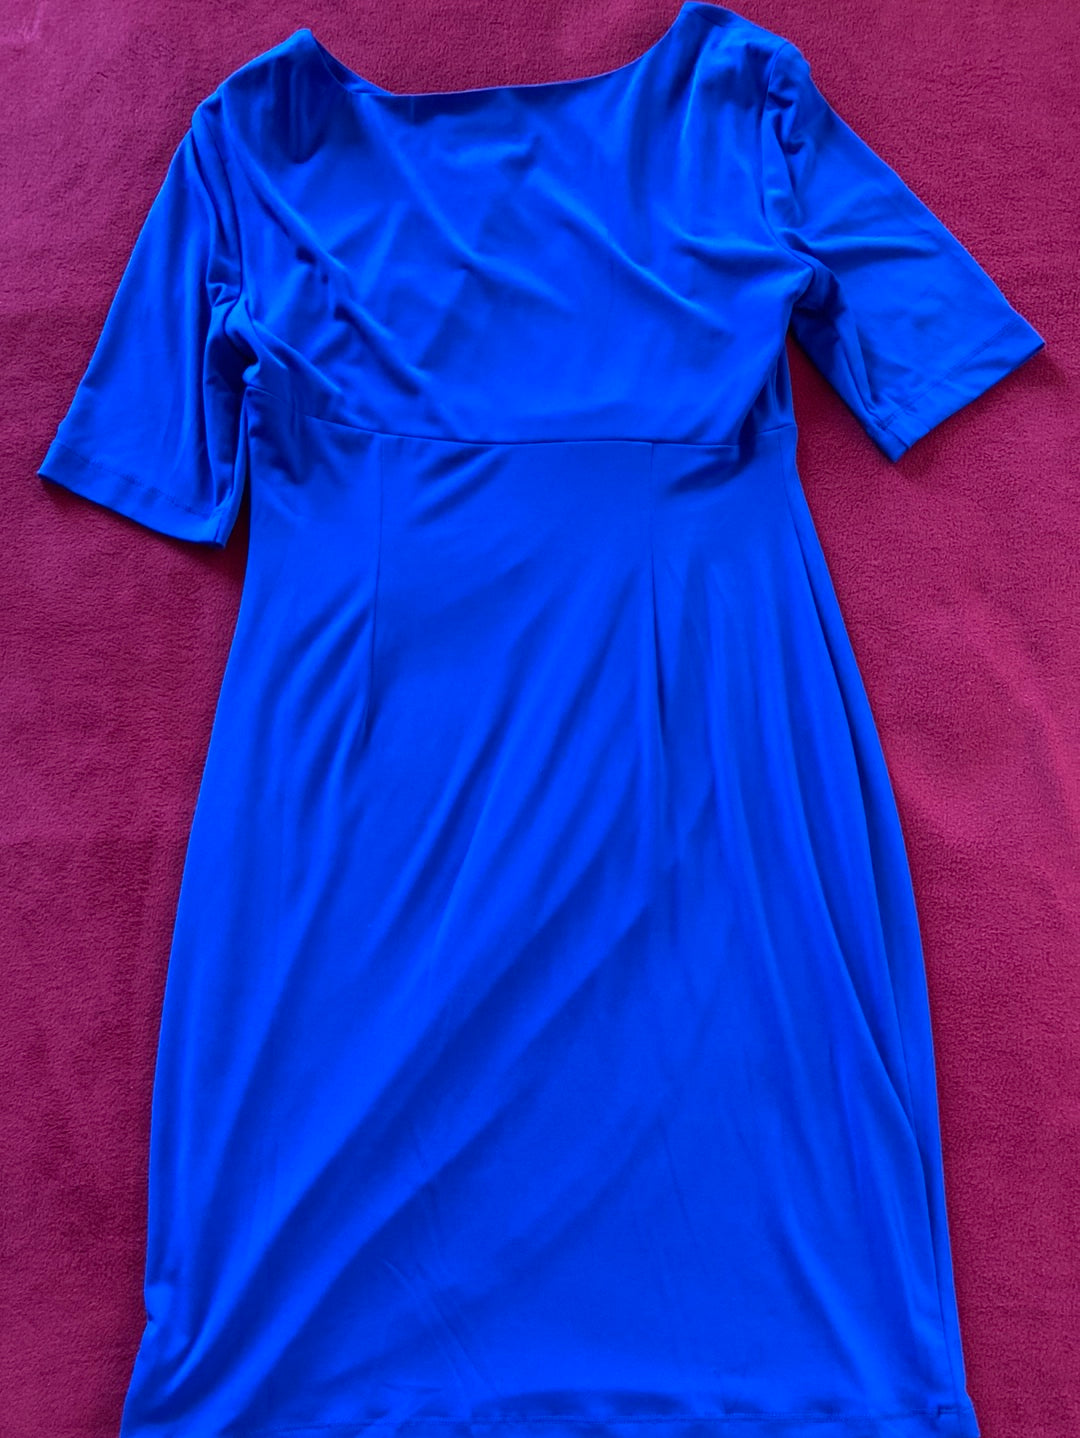 ROYAL BLUE North Style Dress Size 6P